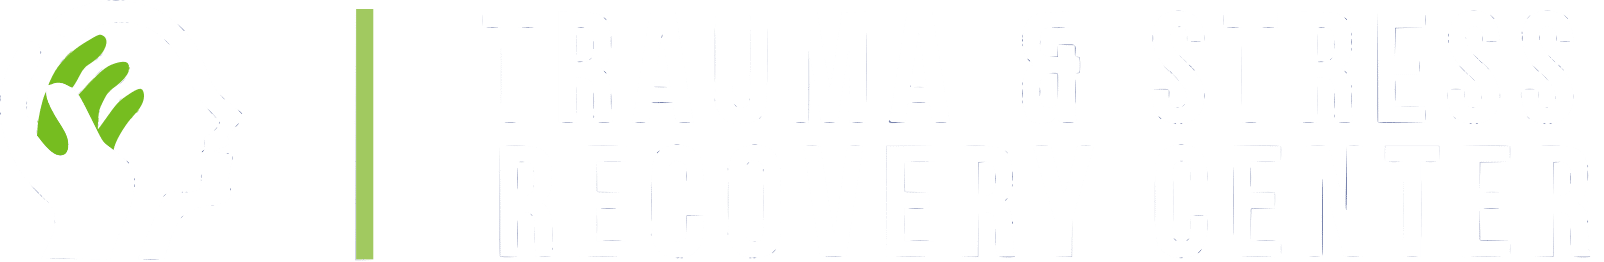 Trauma & Stress Recovery Center